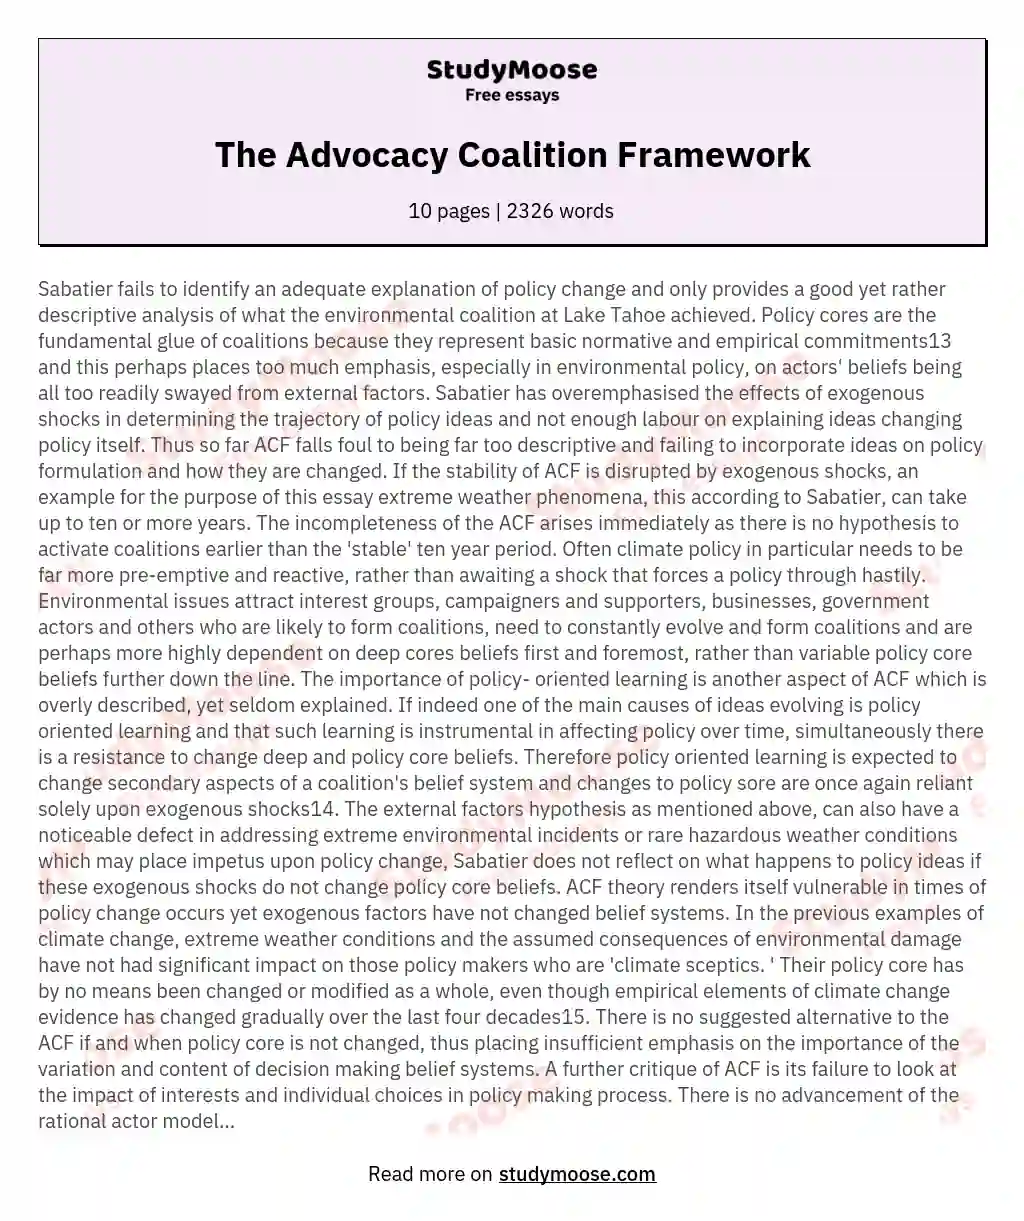 The Advocacy Coalition Framework essay